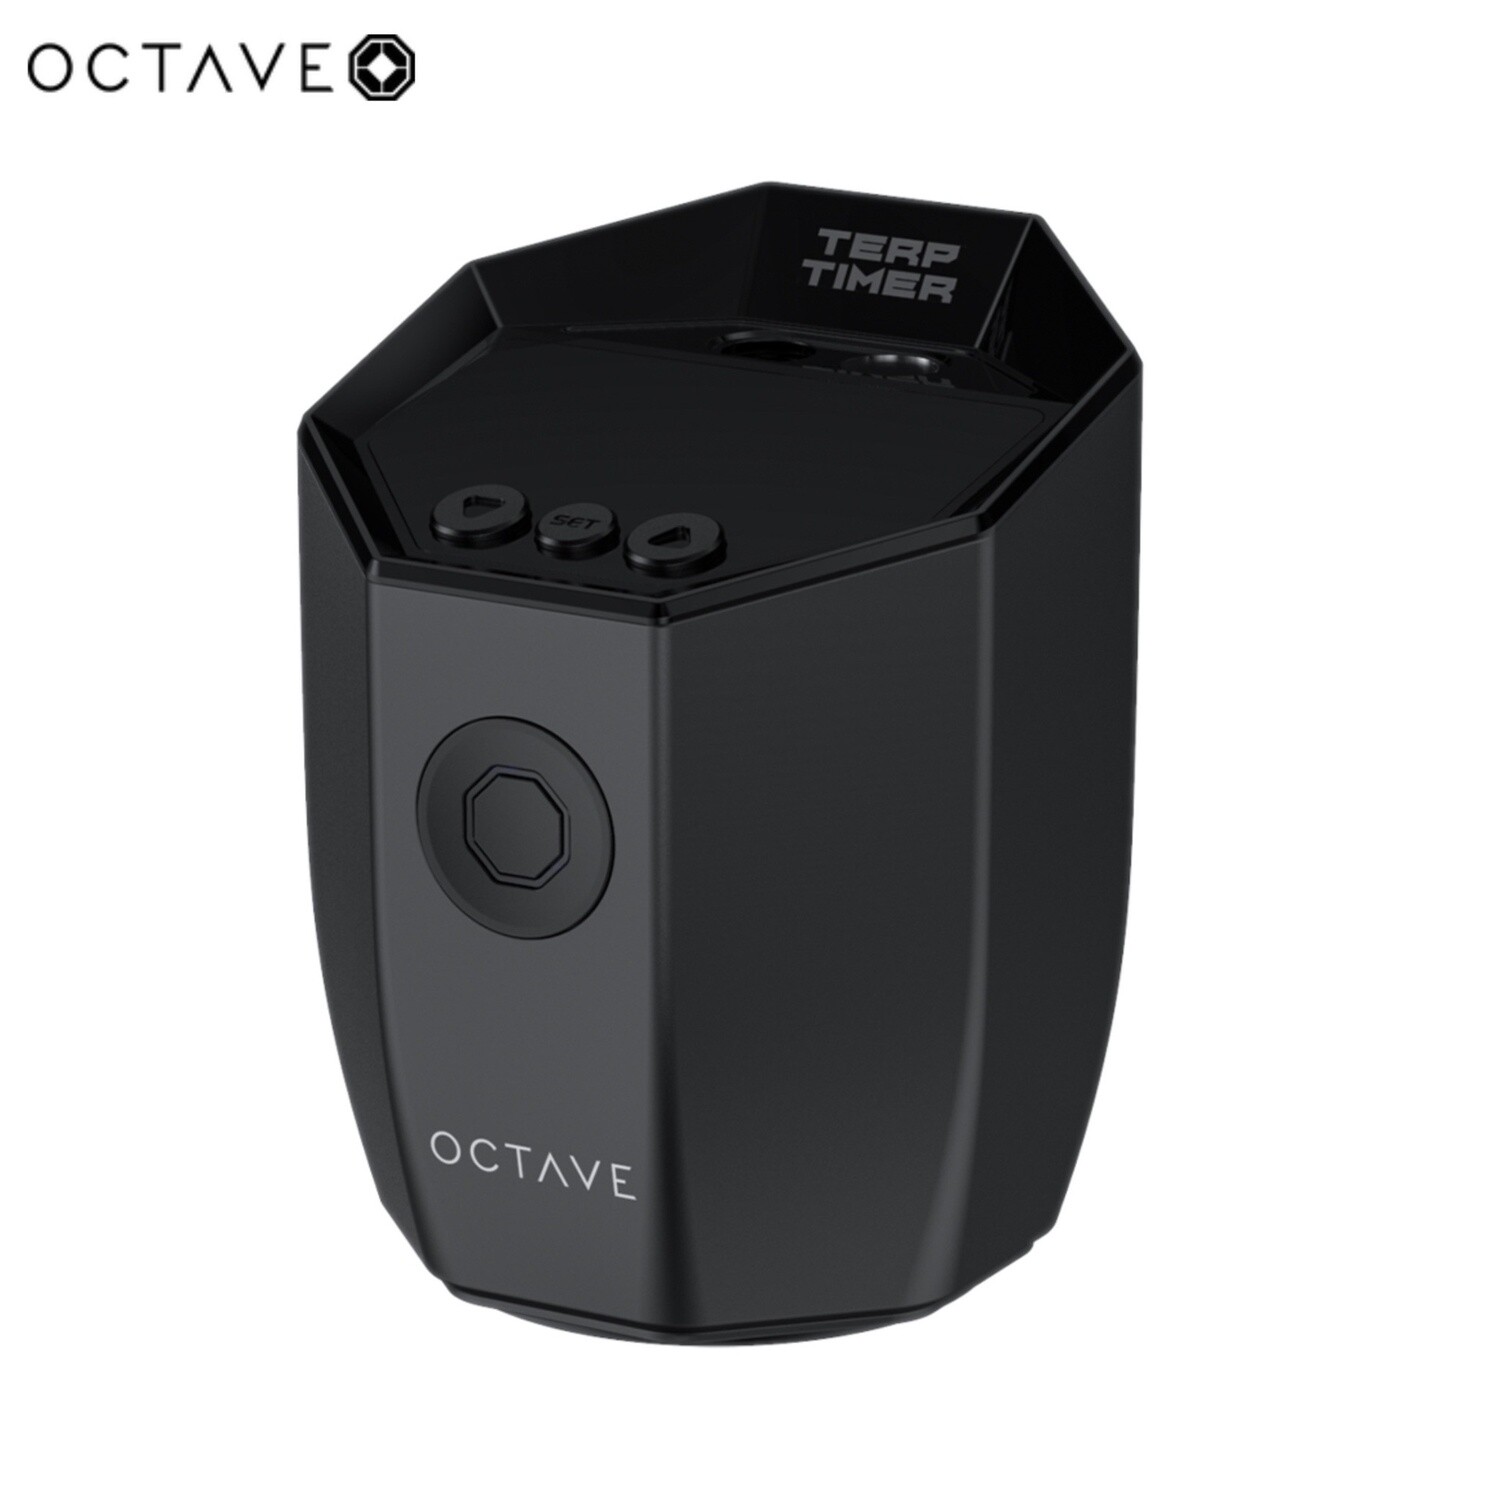 Octave™ Terp Timer